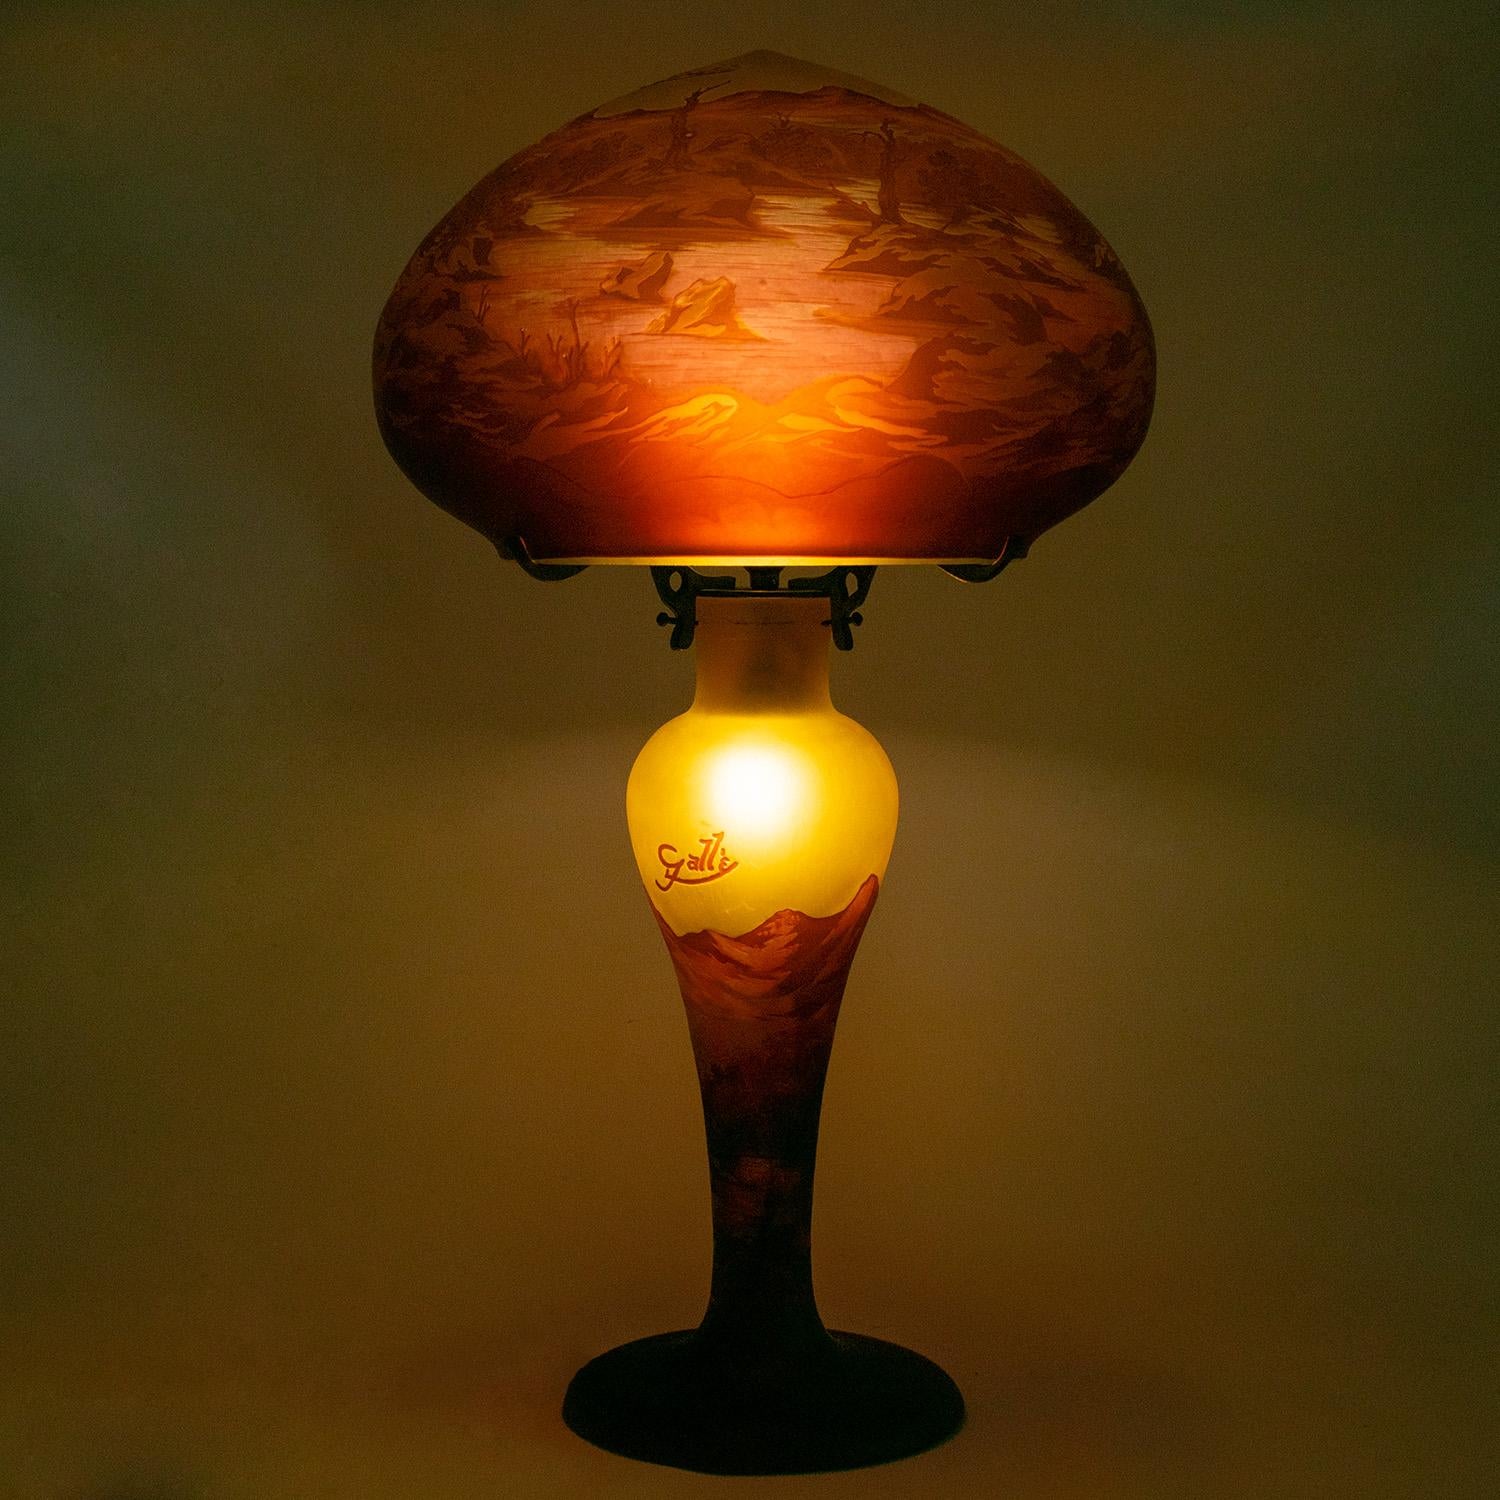 Gallè Tip - Impressive Large ART NOUVEAU MUSHROOM LAMP in multilayer glass For Sale 4